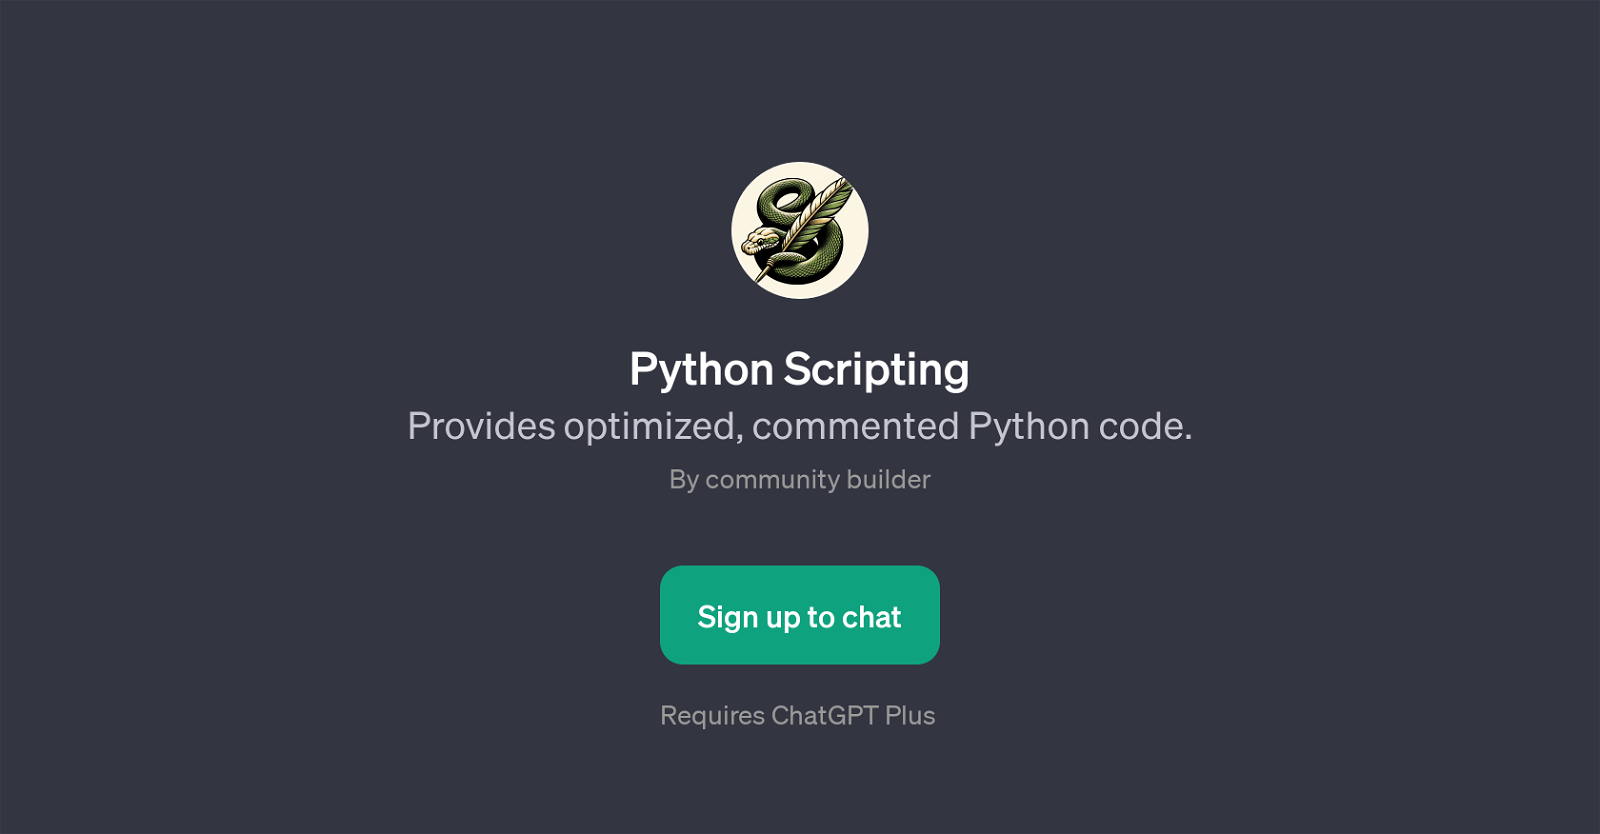 Python Scripting website